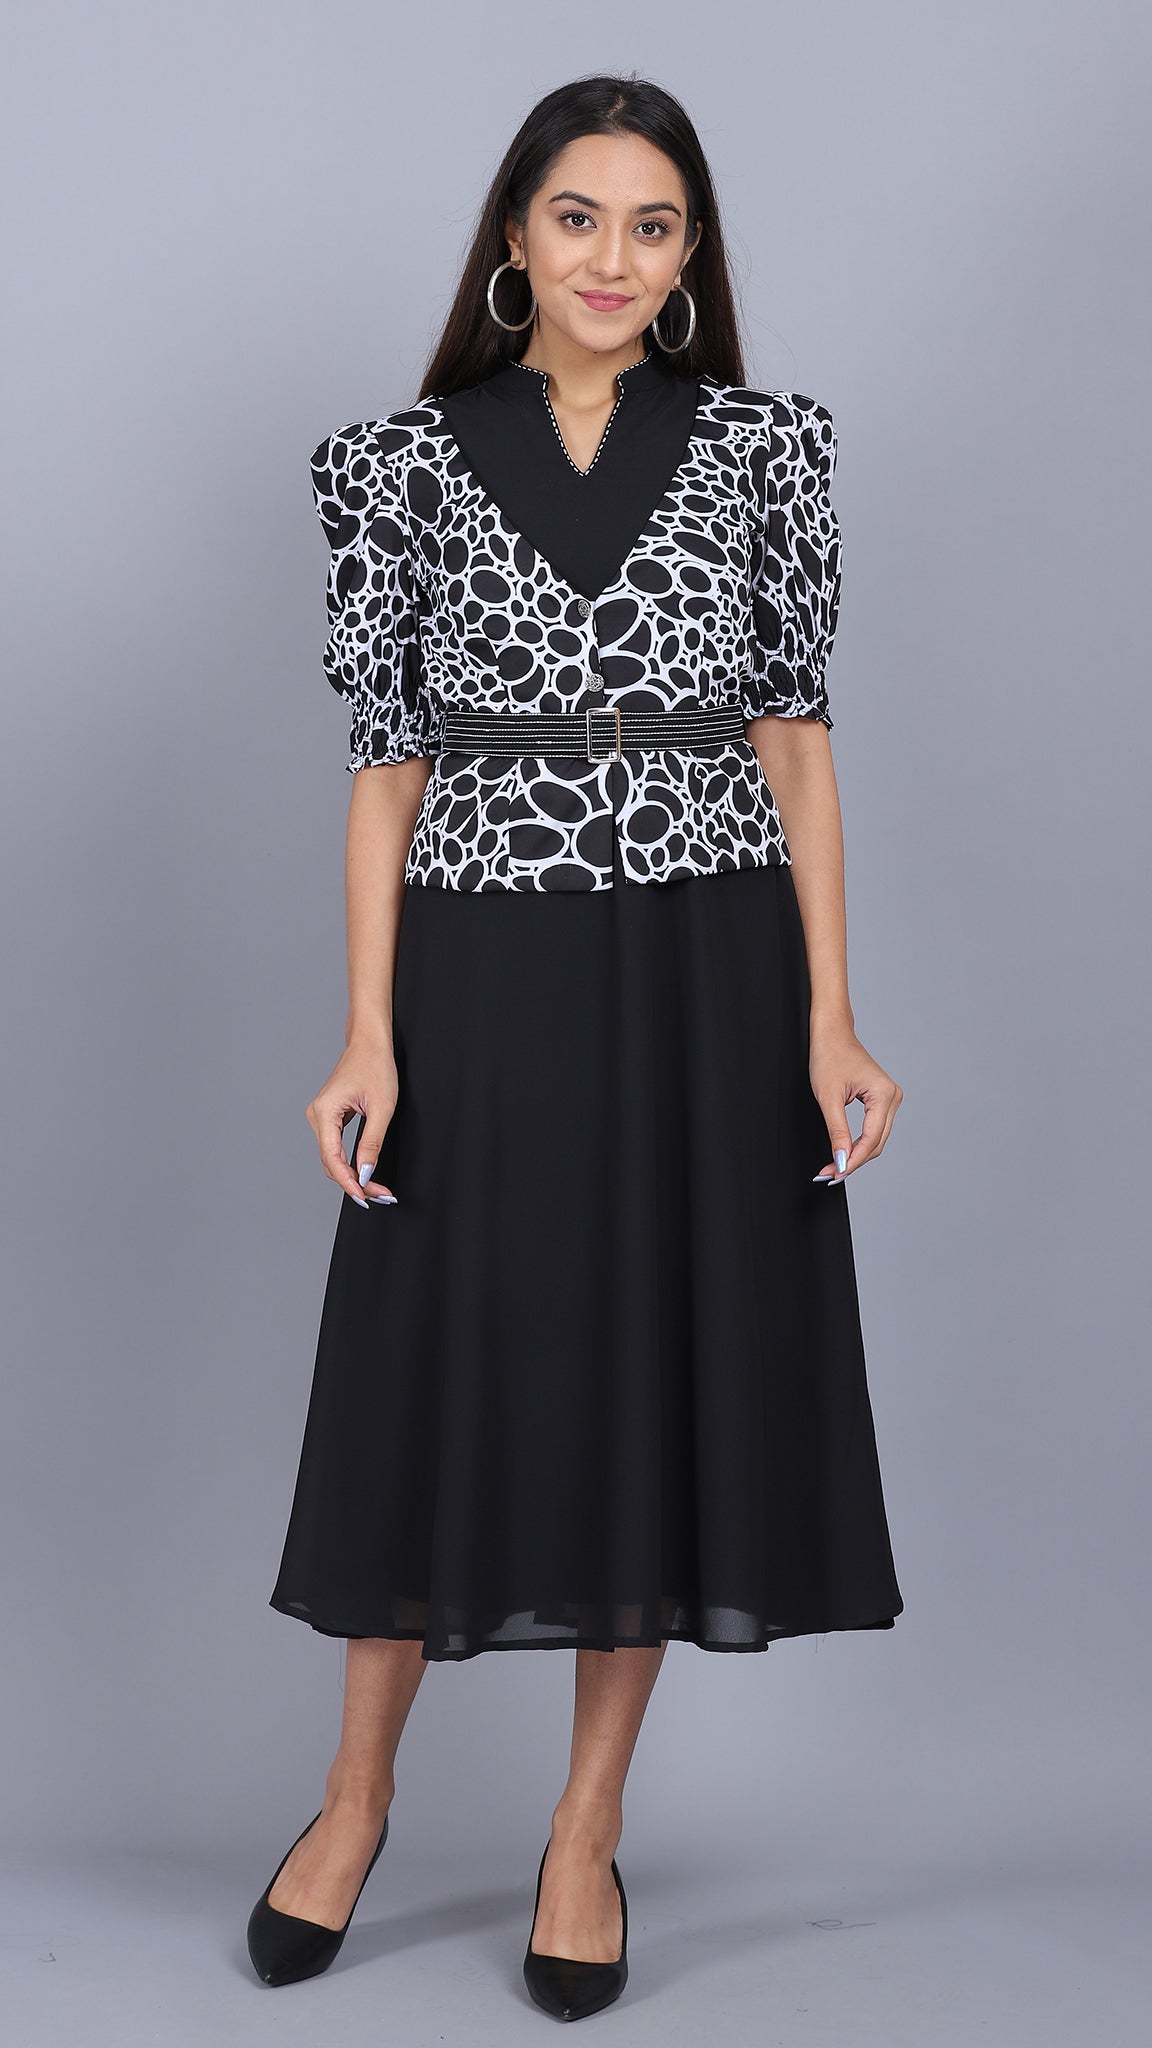 Black dress with geometrical printed Jacket 2 Pcs set